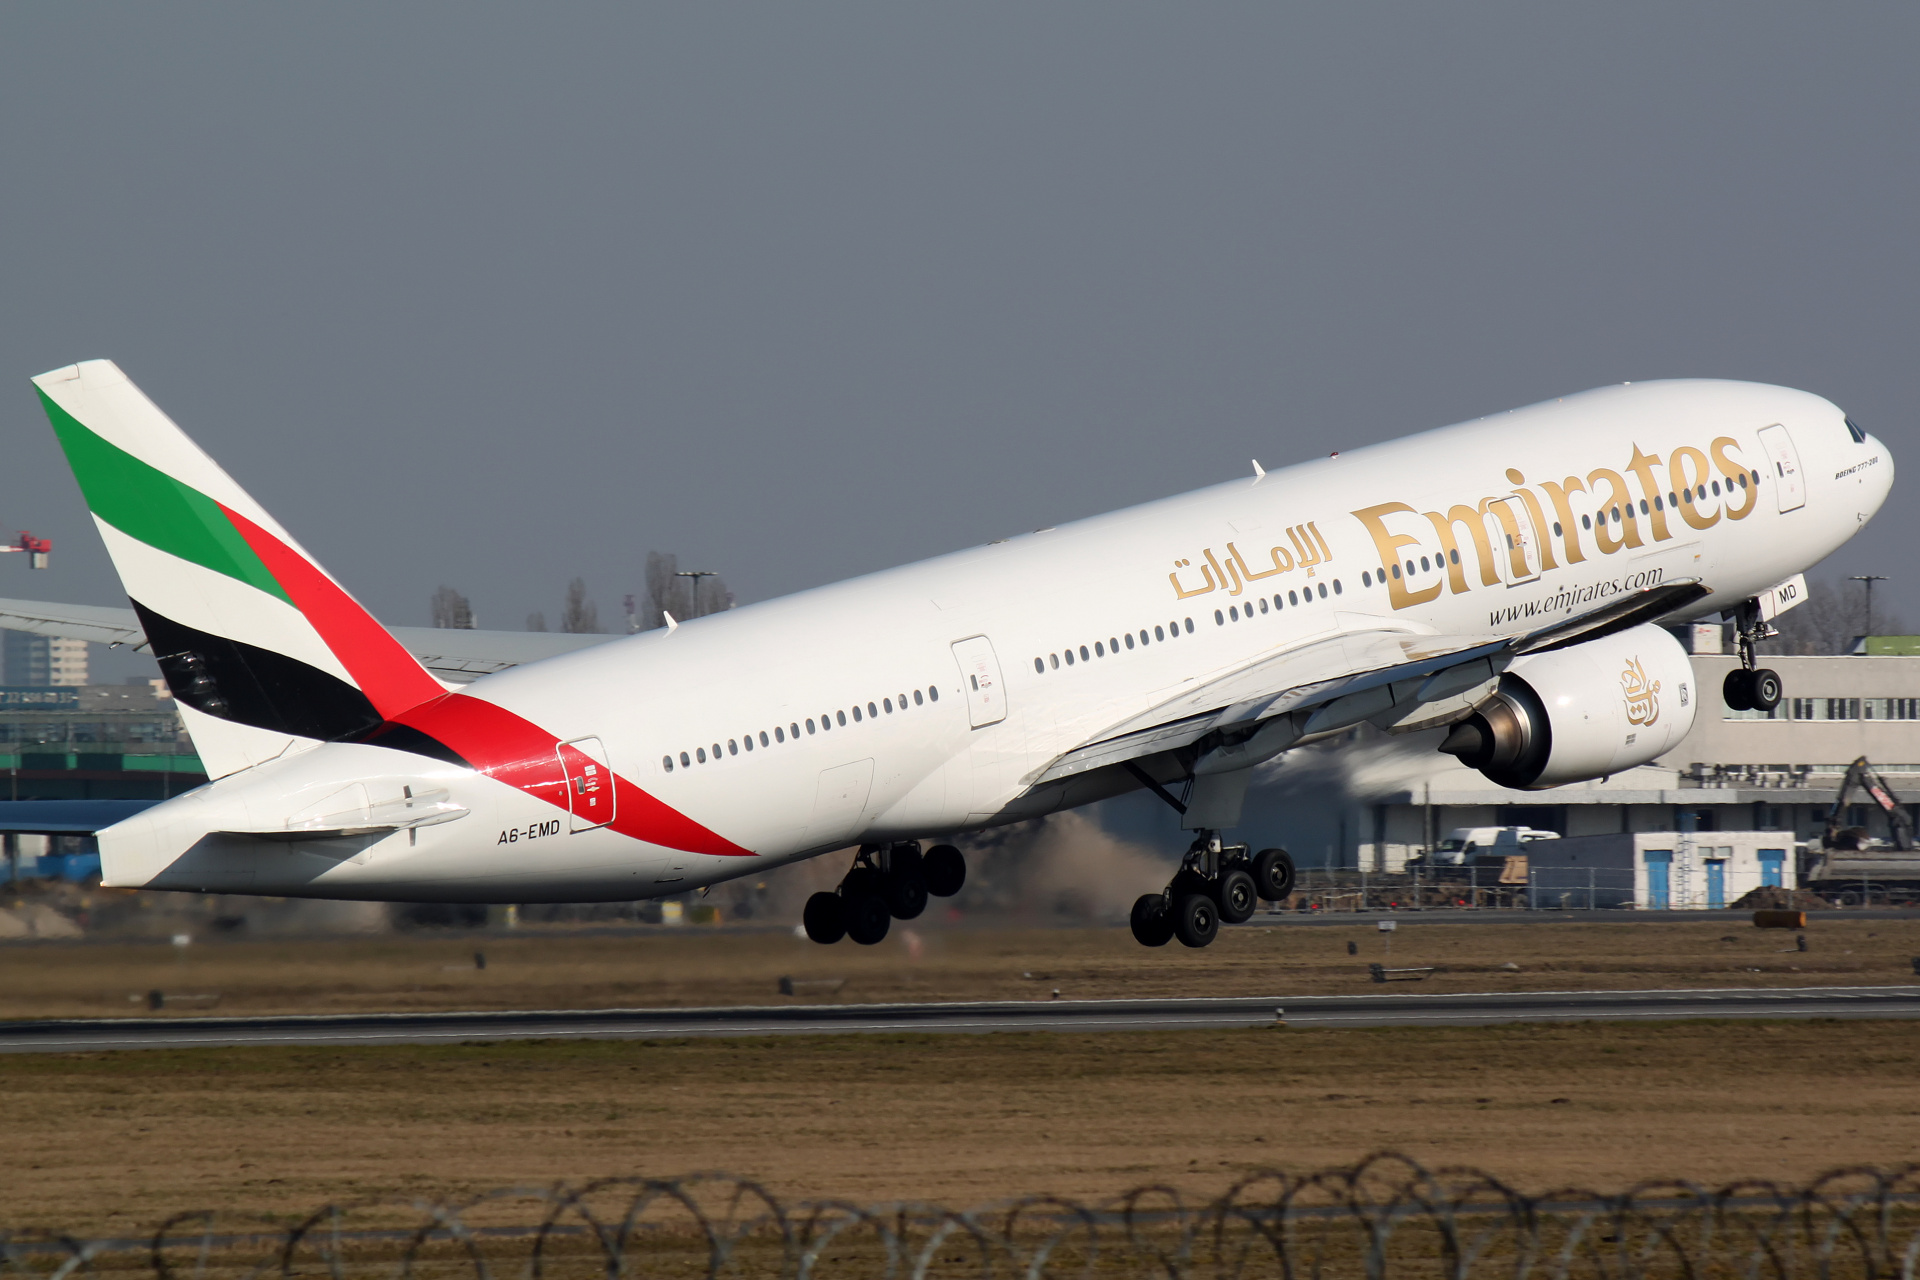 A6-EMD (Aircraft » EPWA Spotting » Boeing 777-200 and 200ER » Emirates)